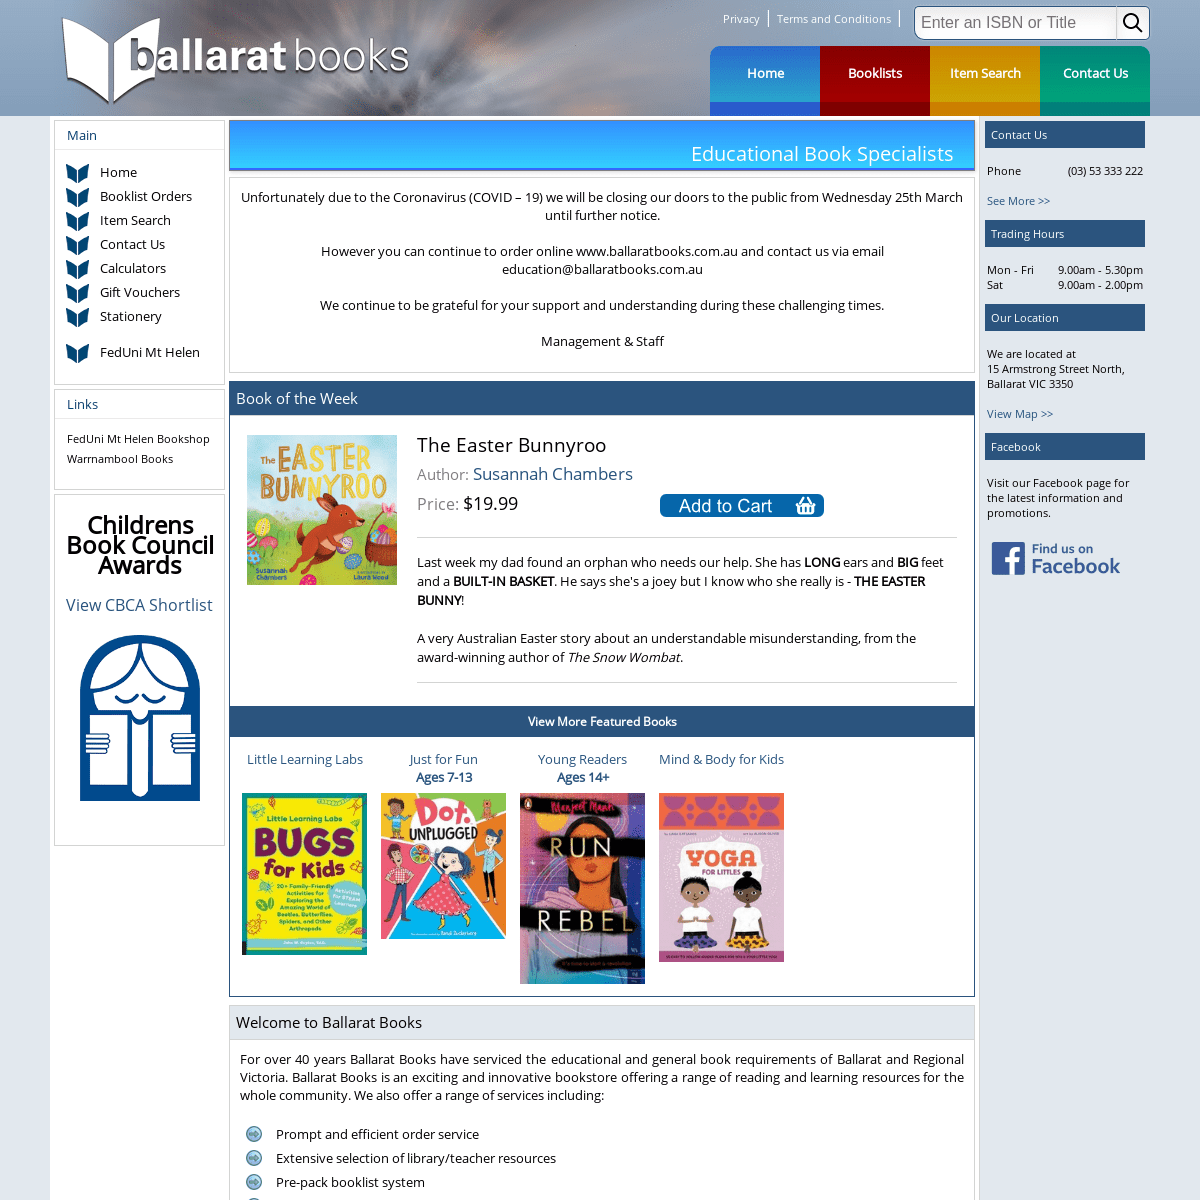 A complete backup of ballaratbooks.com.au